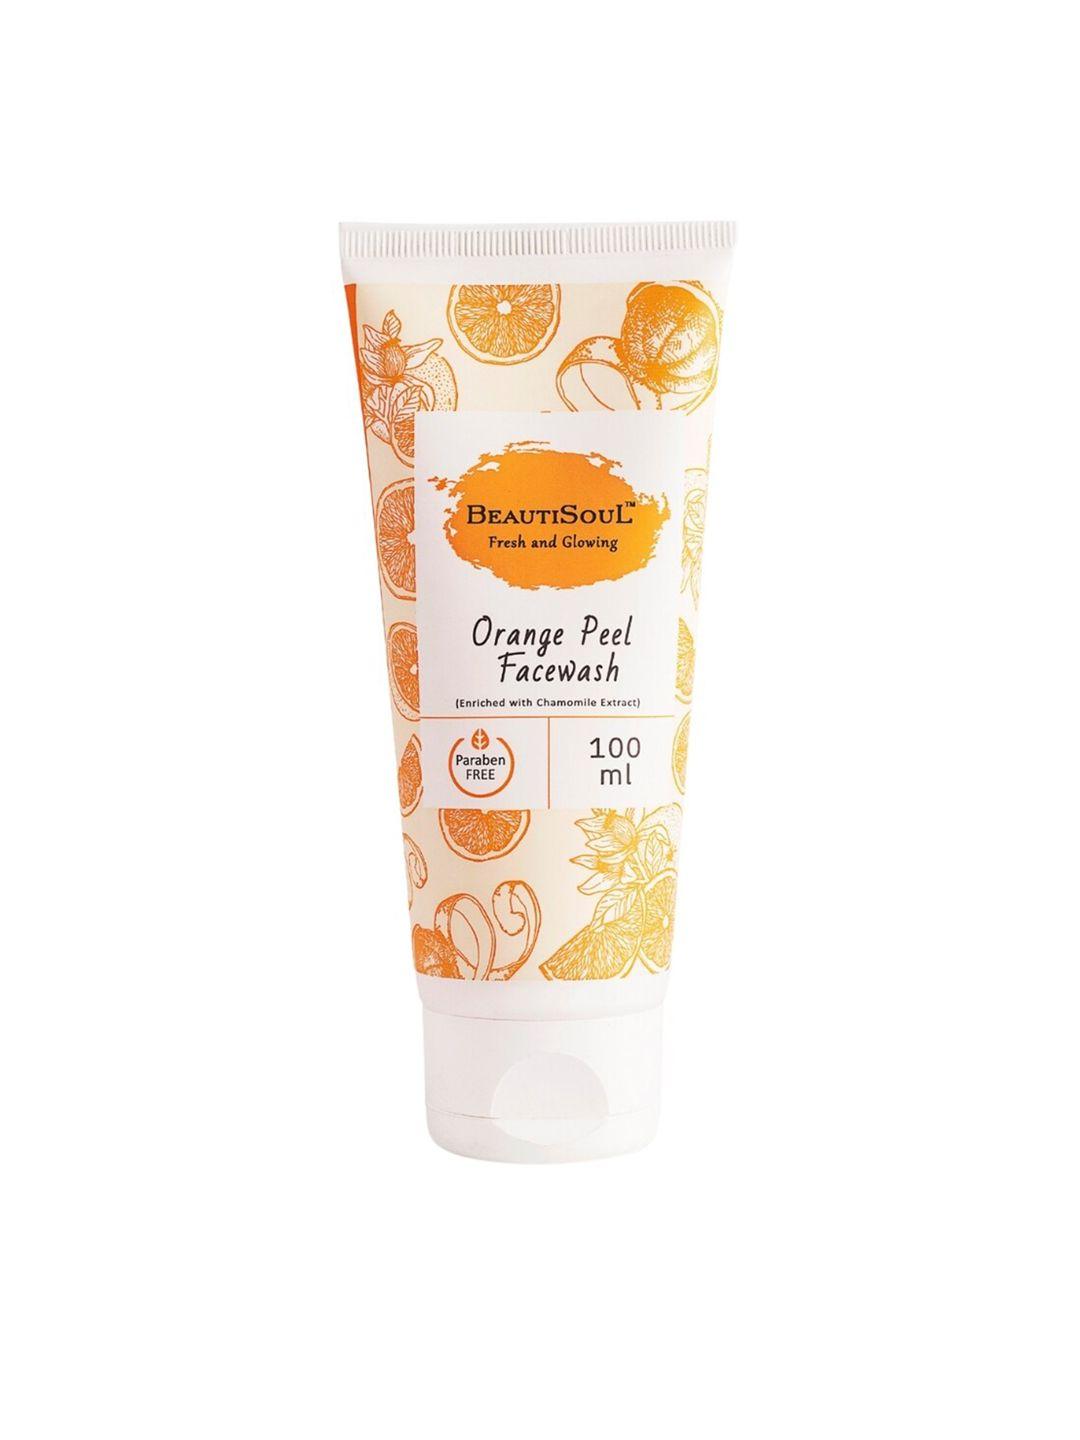 beautisoul-orange-peel-face-wash-with-chamomile-and-aloe-vera-100-ml